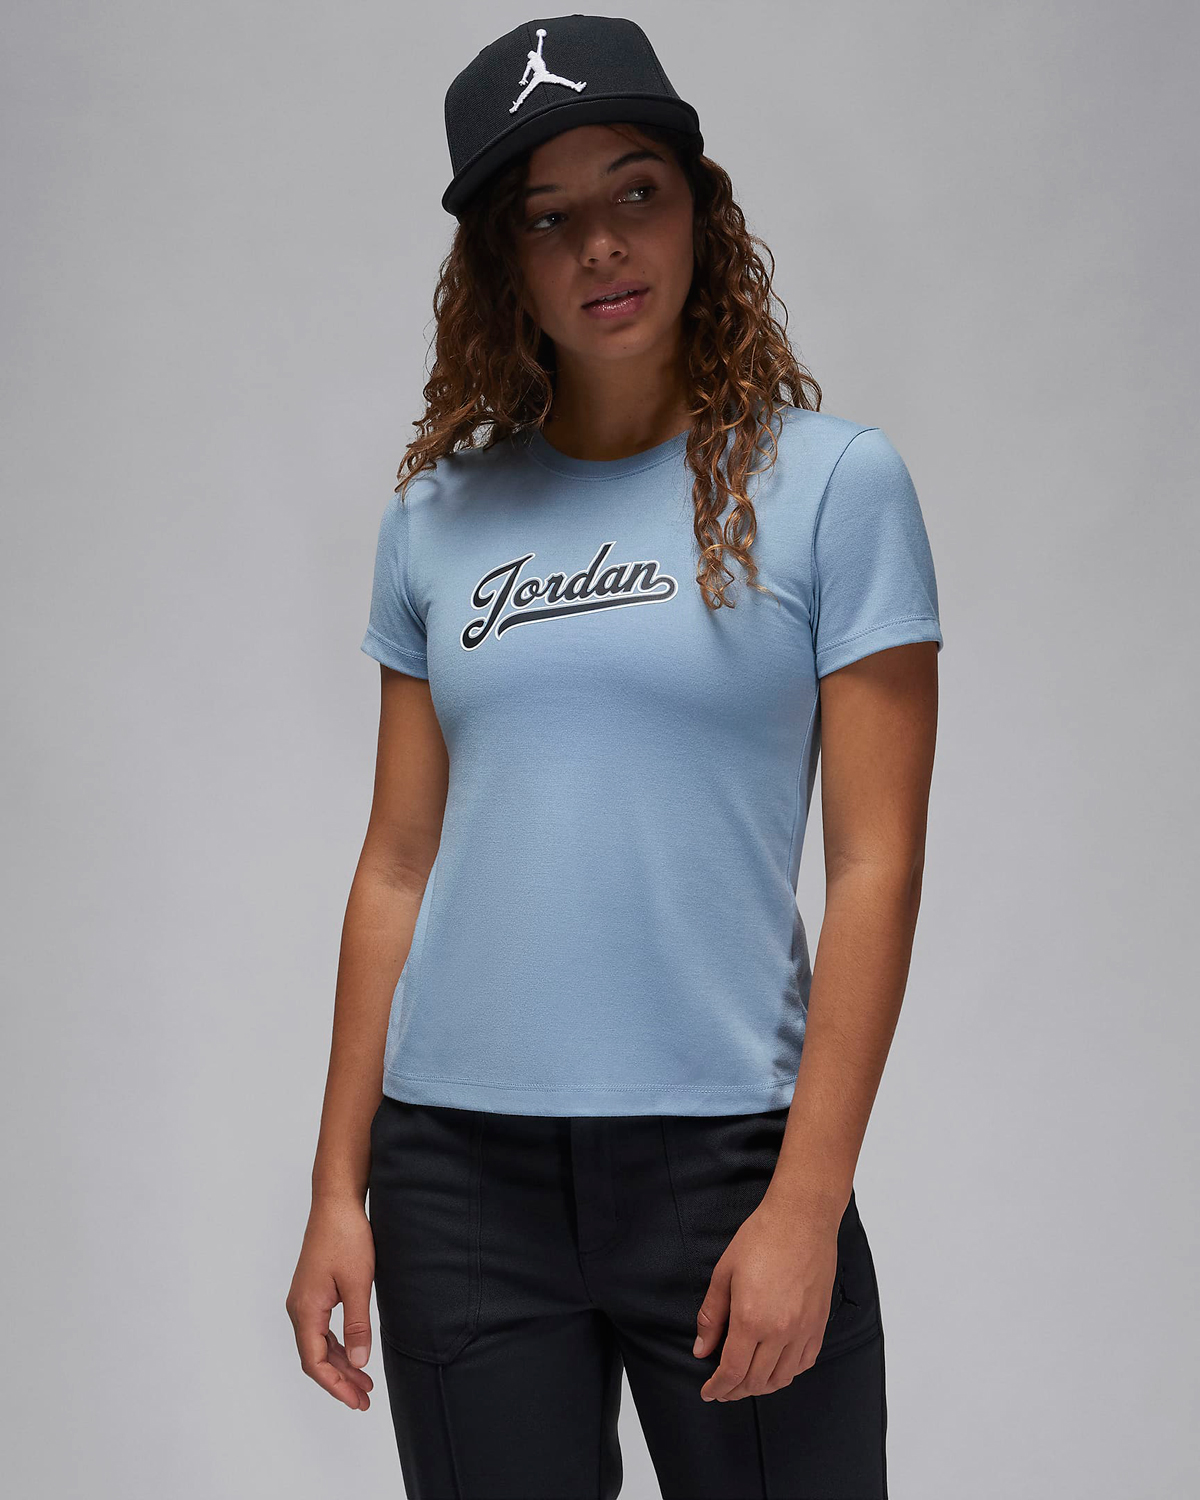 Jordan-Womens-Slim-T-Shirt-Blue-Grey-1